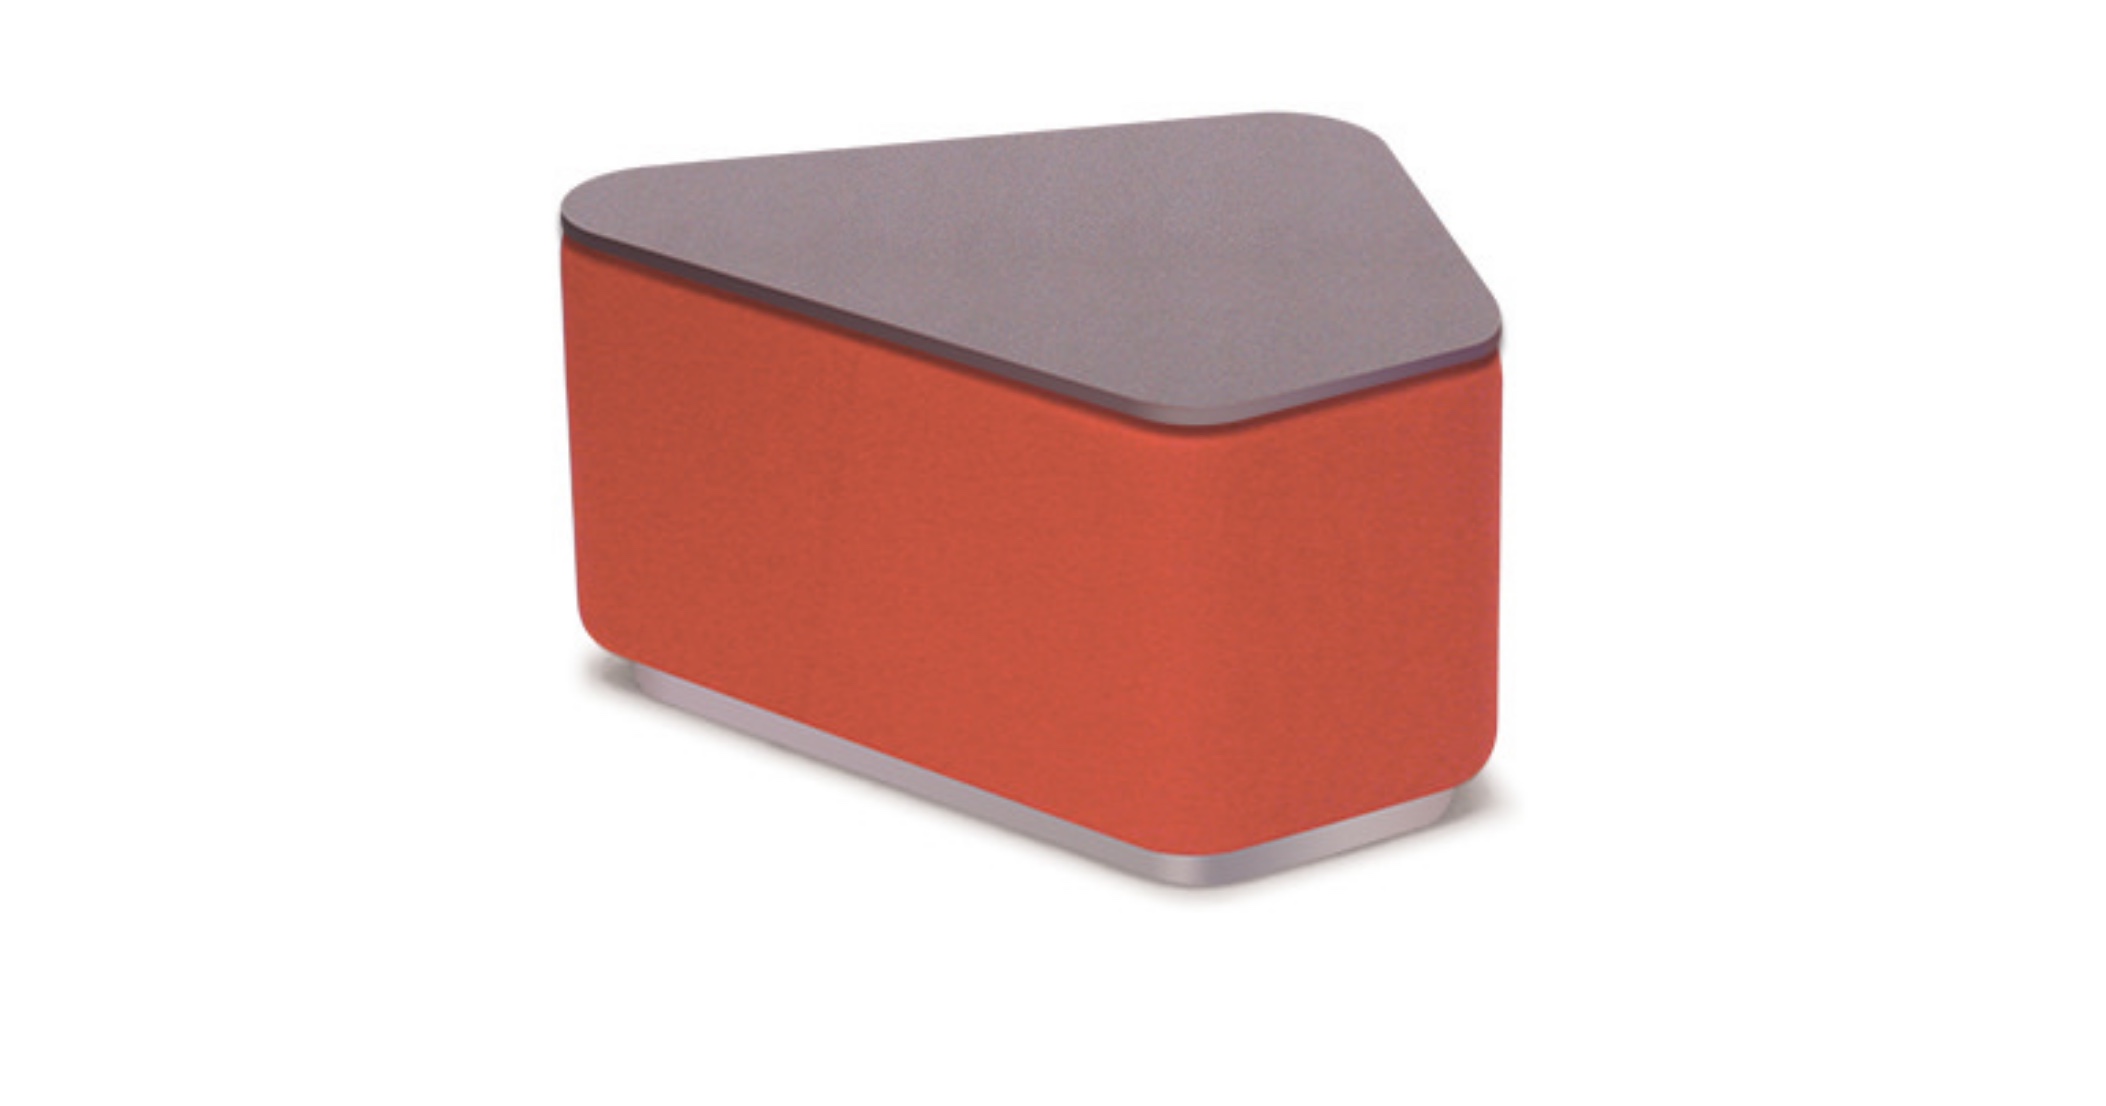 Bouty's Modular Lounge single module red